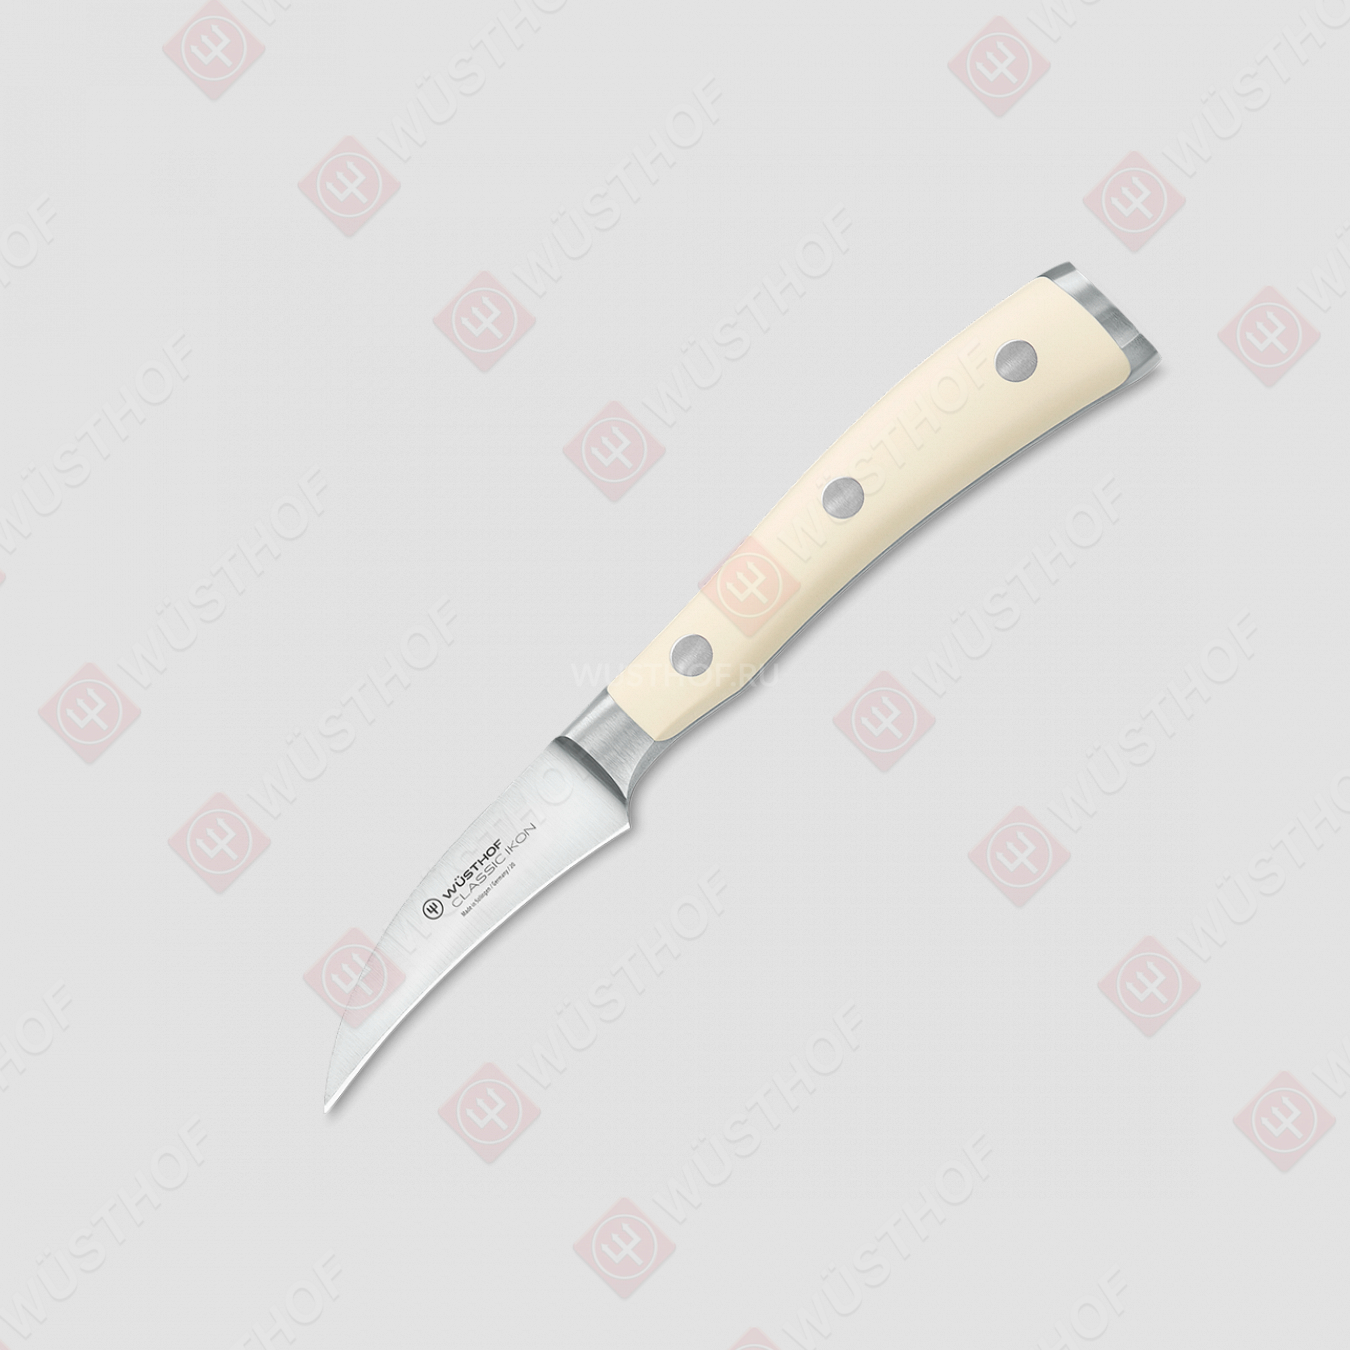 Нож кухонный для чистки 7 см, серия Ikon Cream White, WUESTHOF, Золинген, Германия